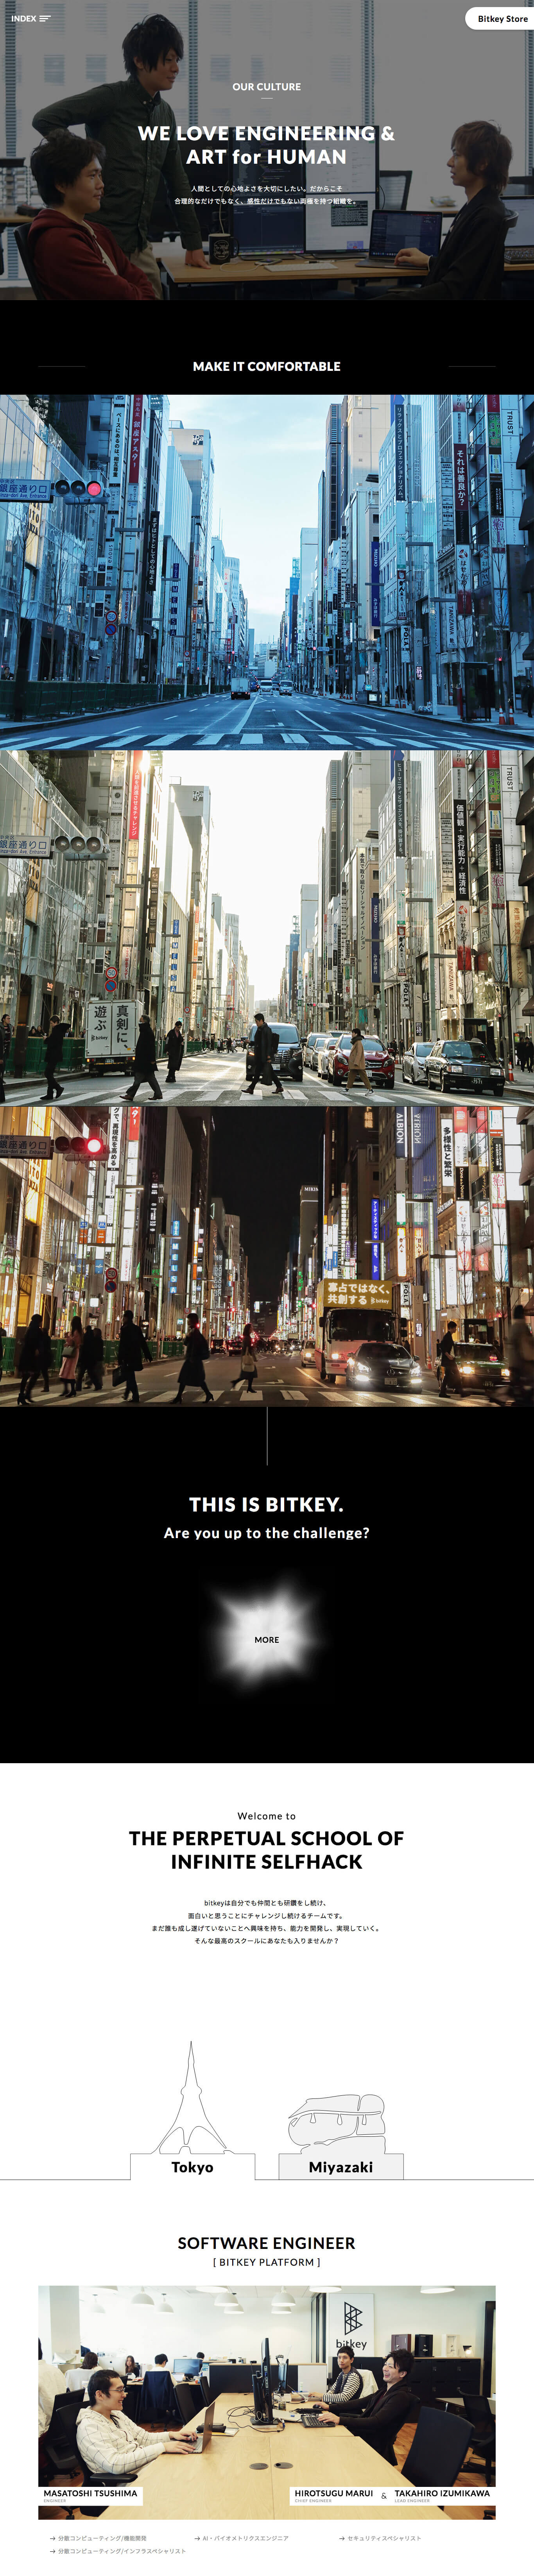 Bitkey inc. image